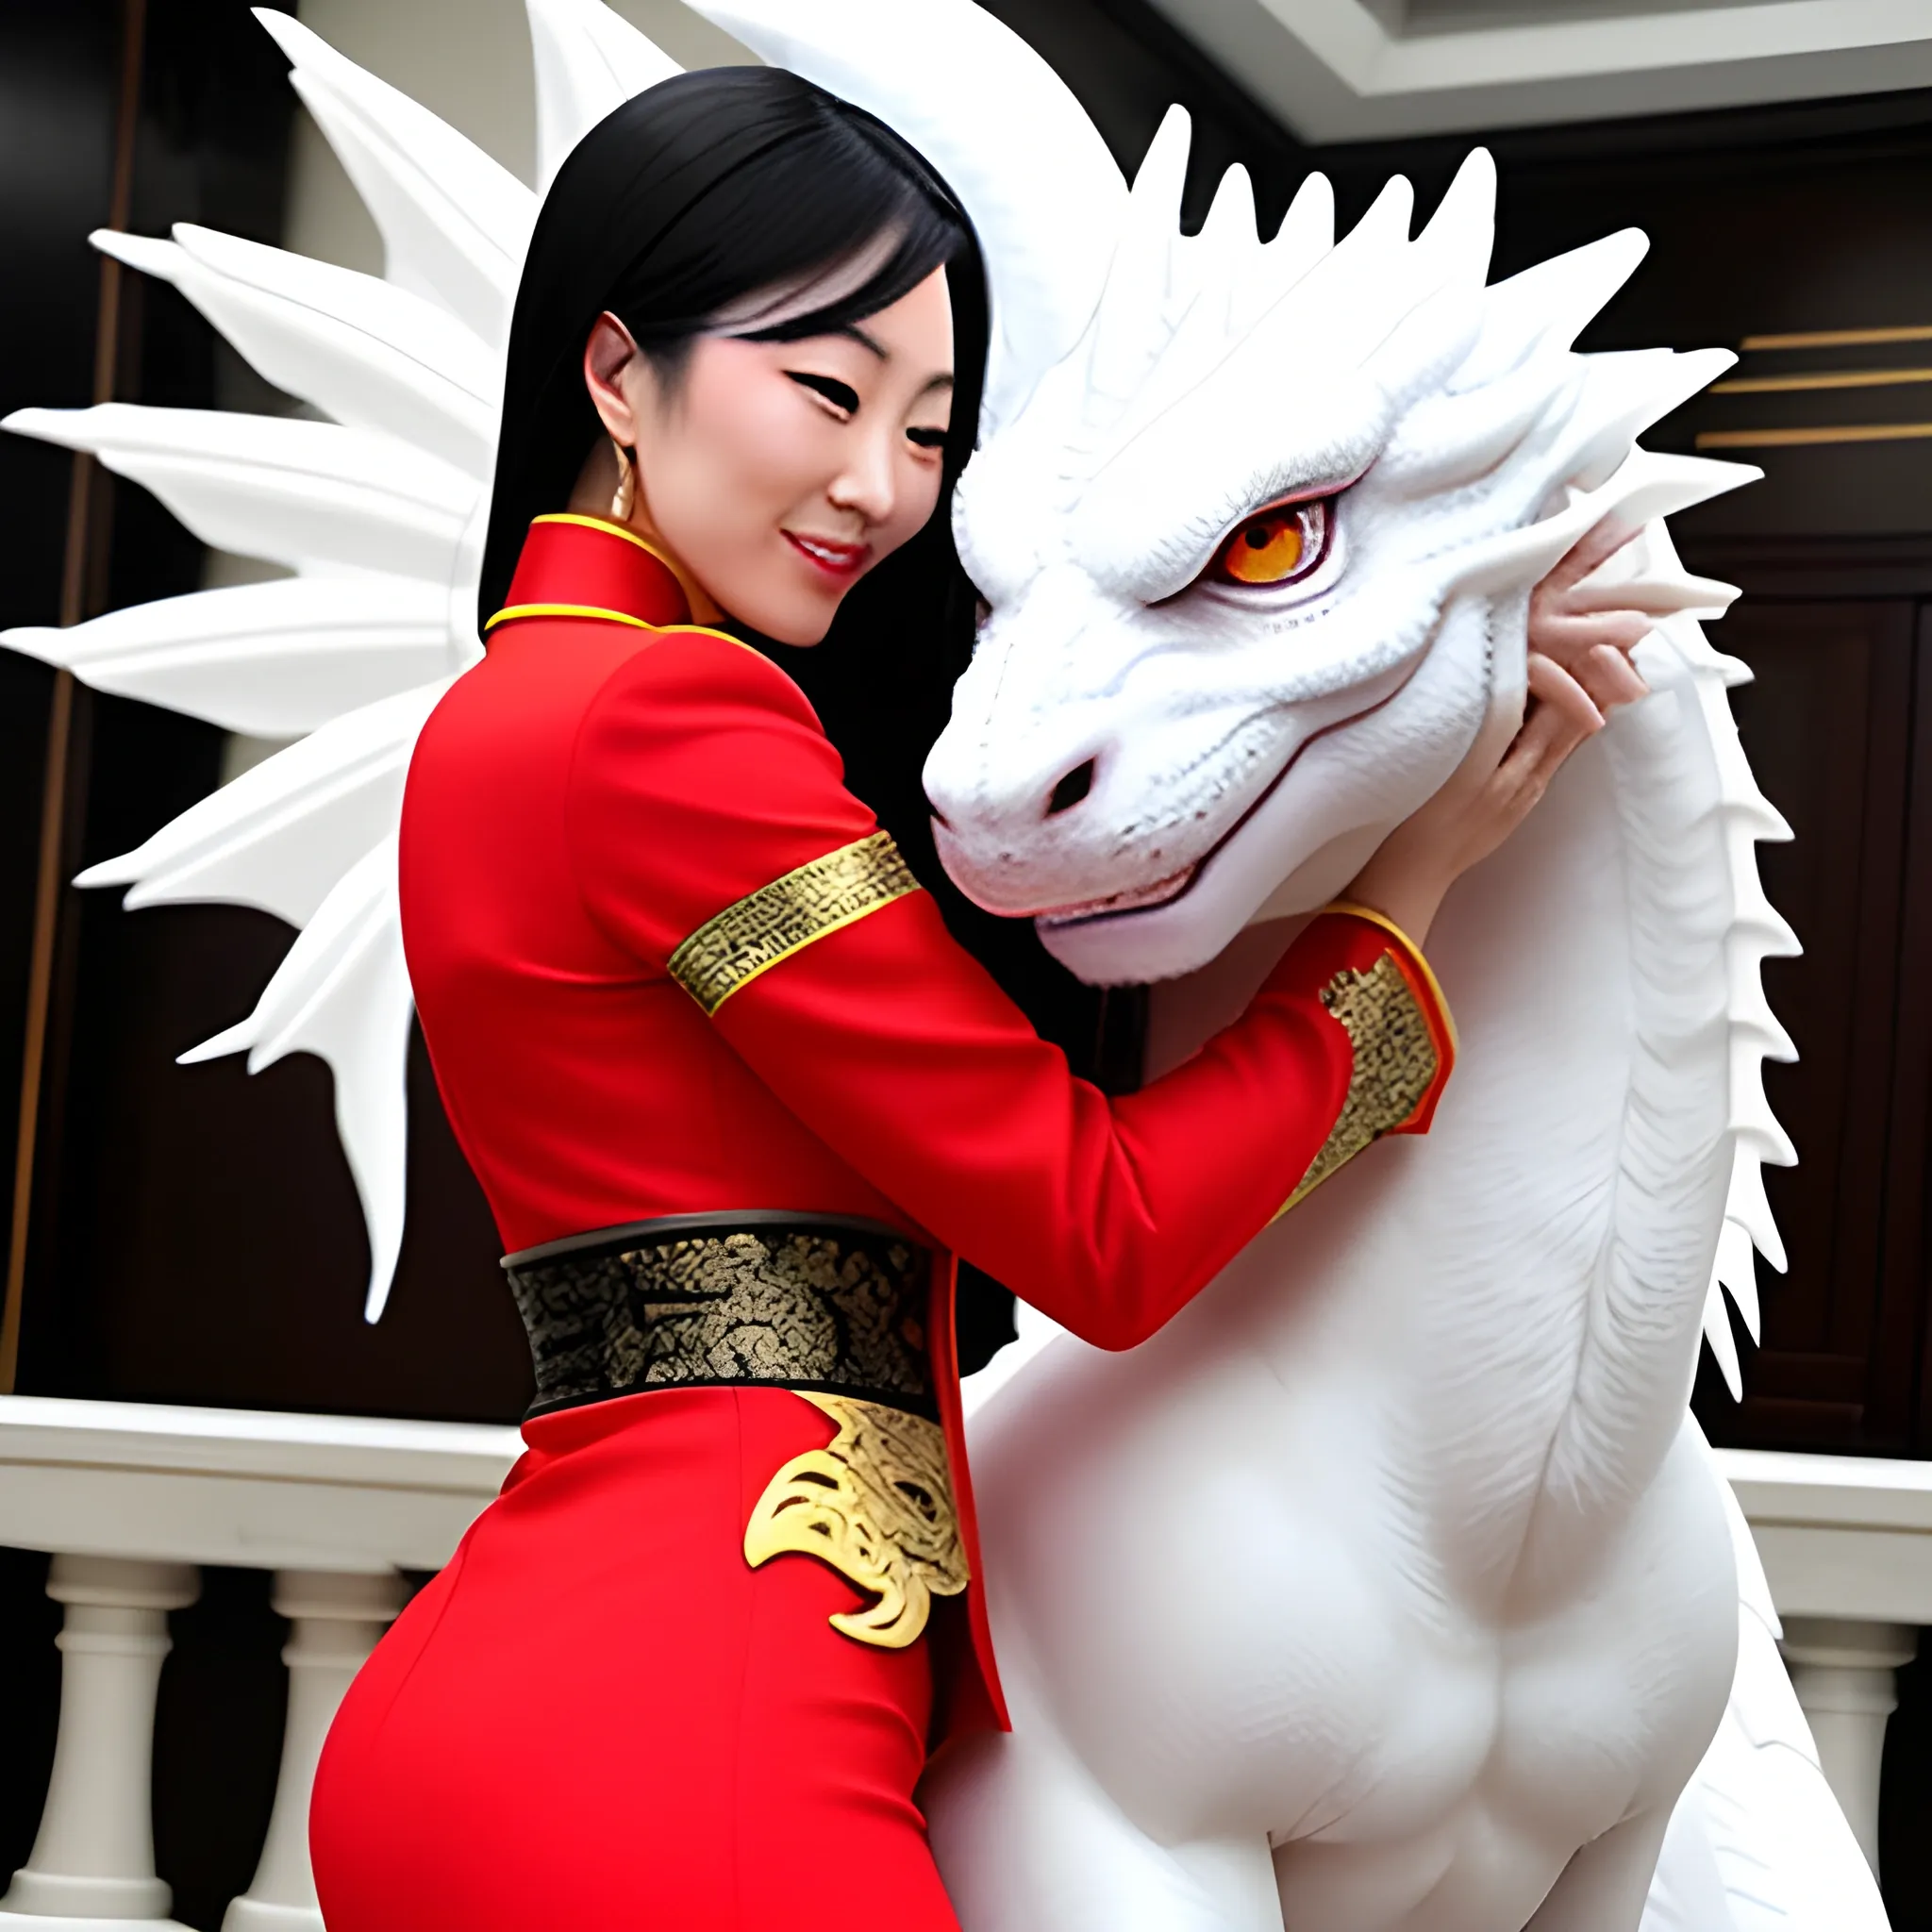 Chinese beauty hugs a cute little white dragon